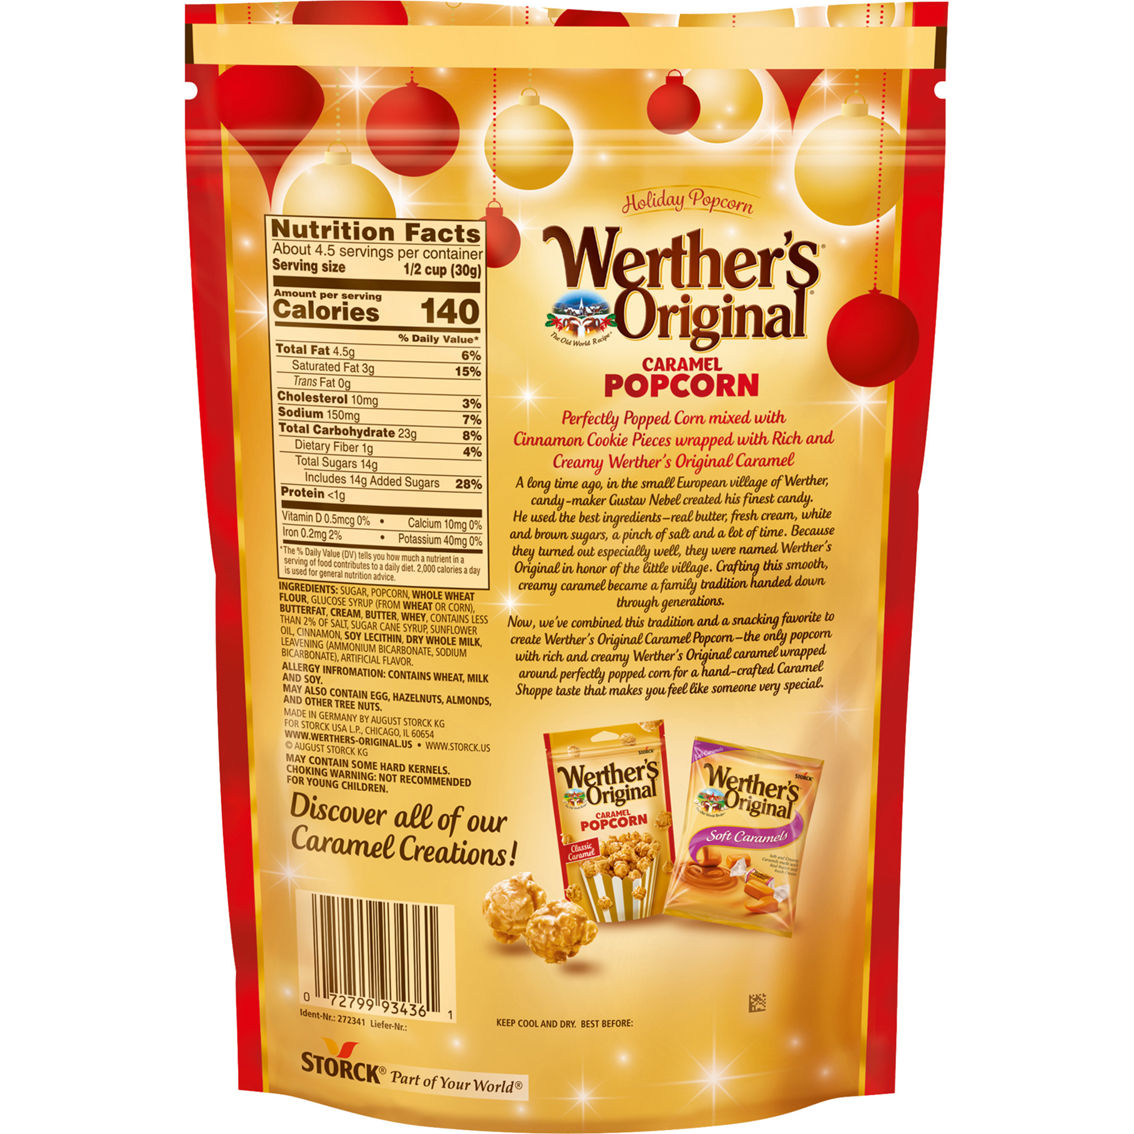 Werther's Caramel Cinnamon Cookie Popcorn 5 oz. - Image 2 of 2